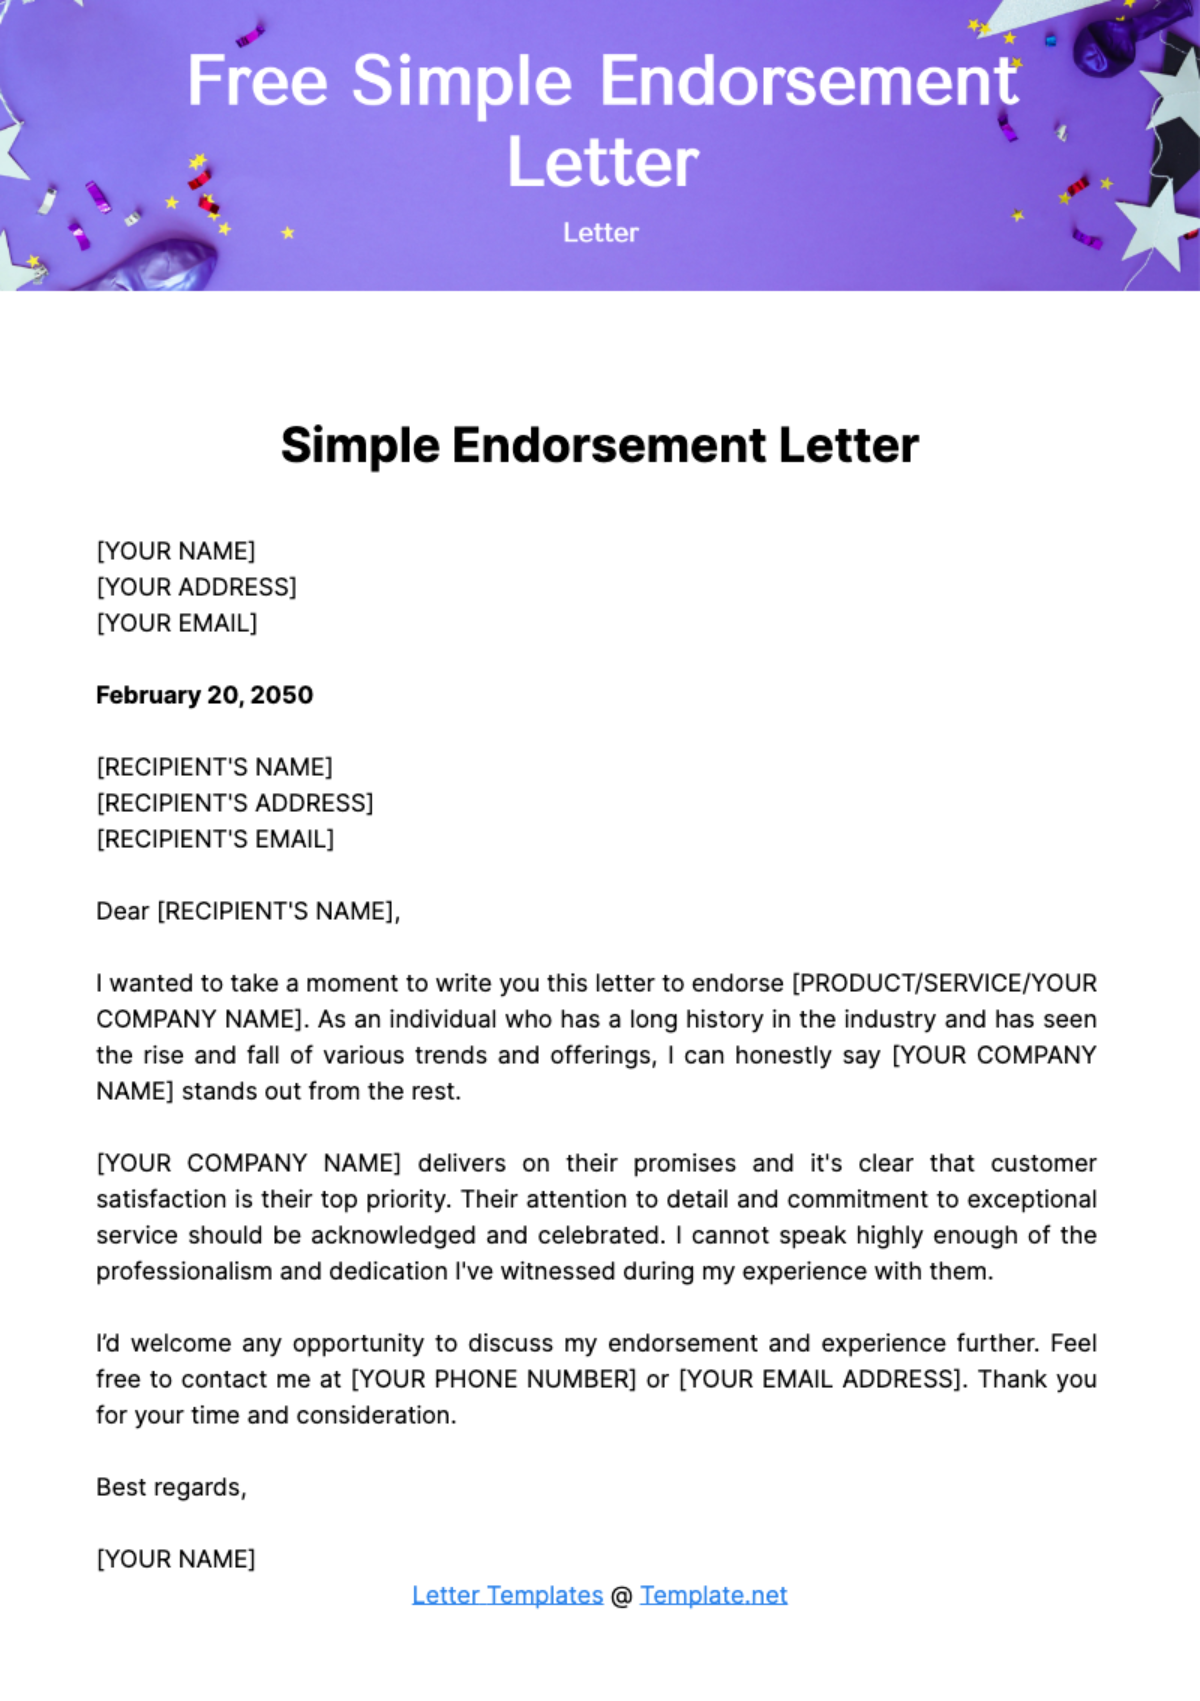 Free Simple Endorsement Letter Template